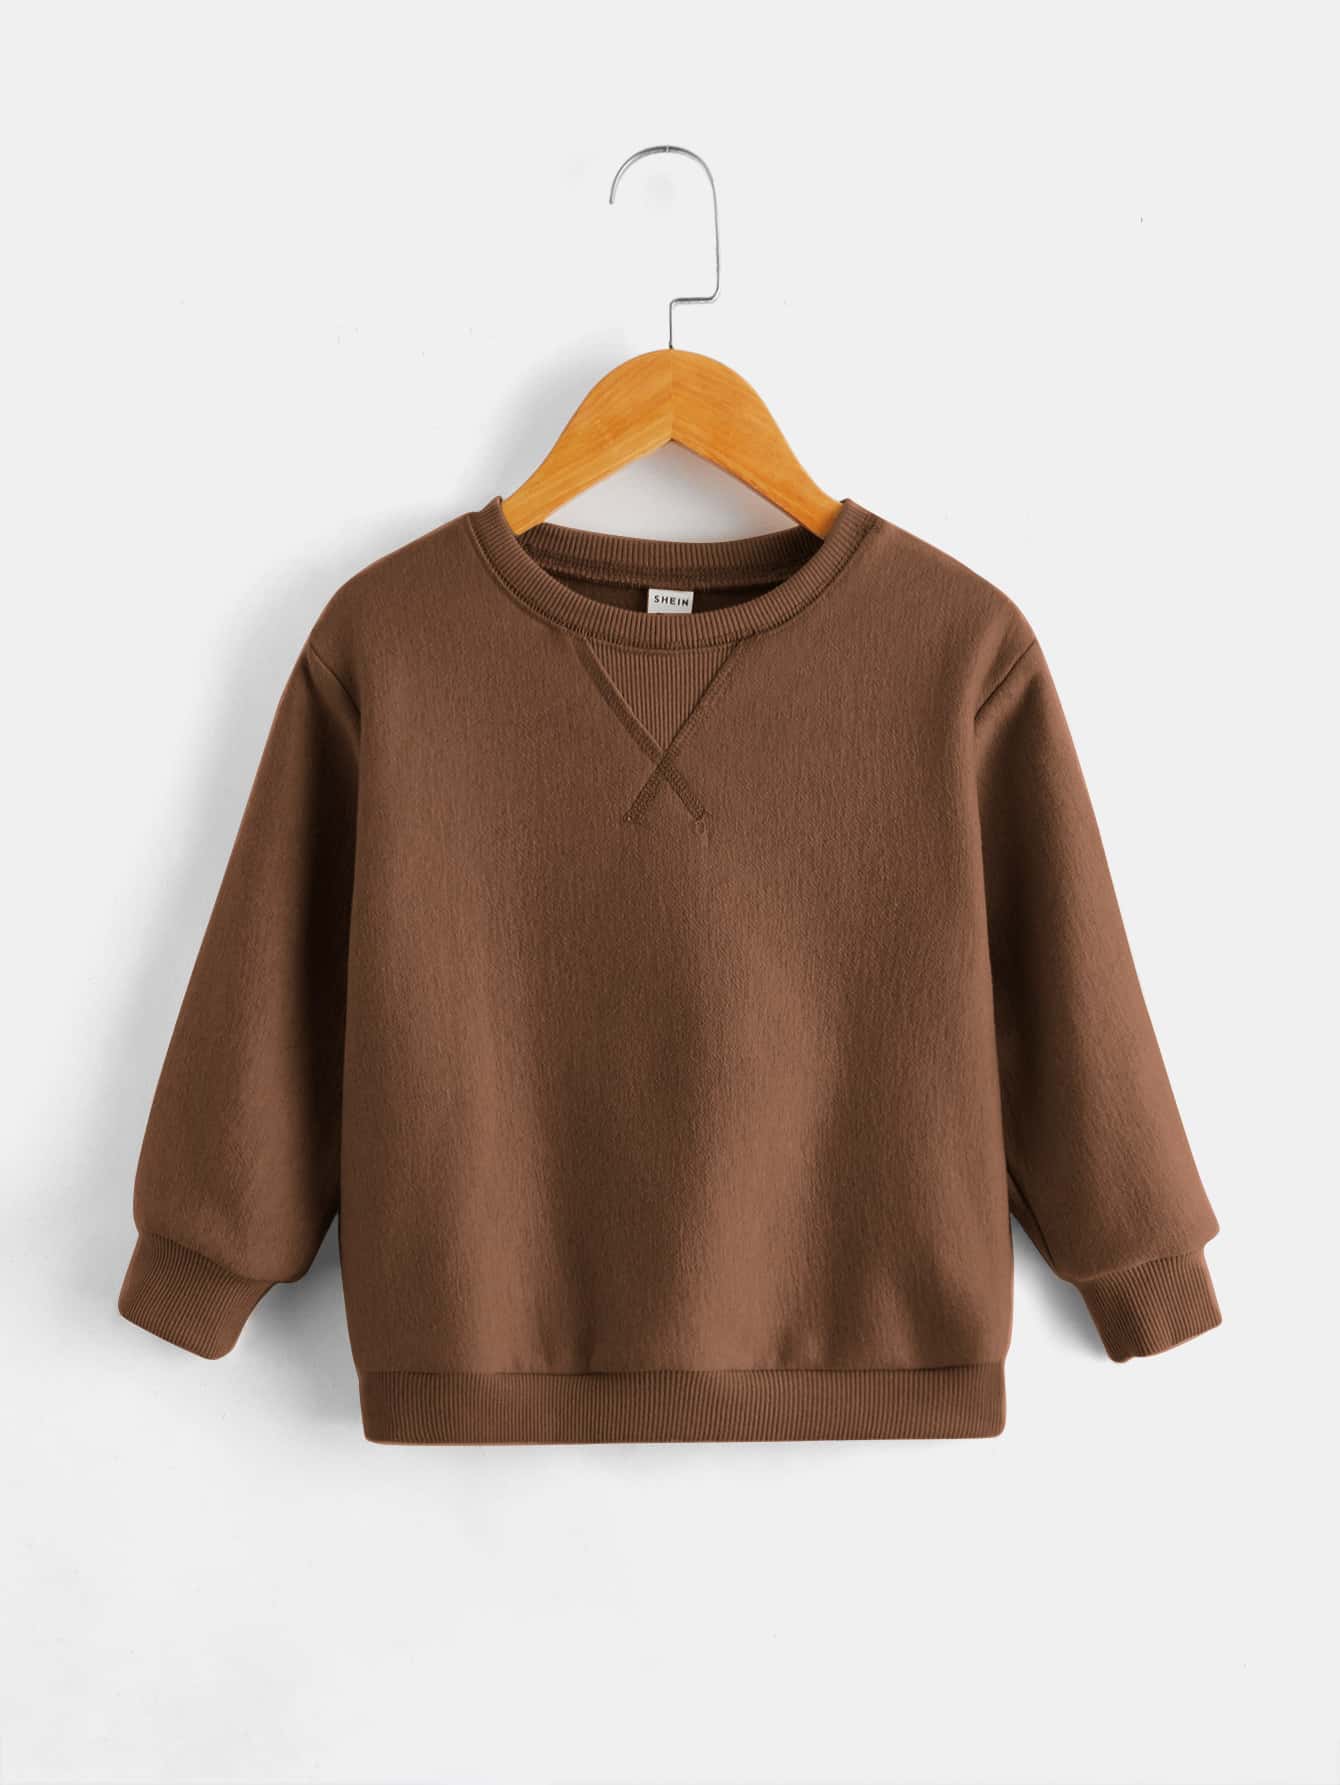 Young Boy Cotton Solid Drop Shoulder Thermal Sweatshirt